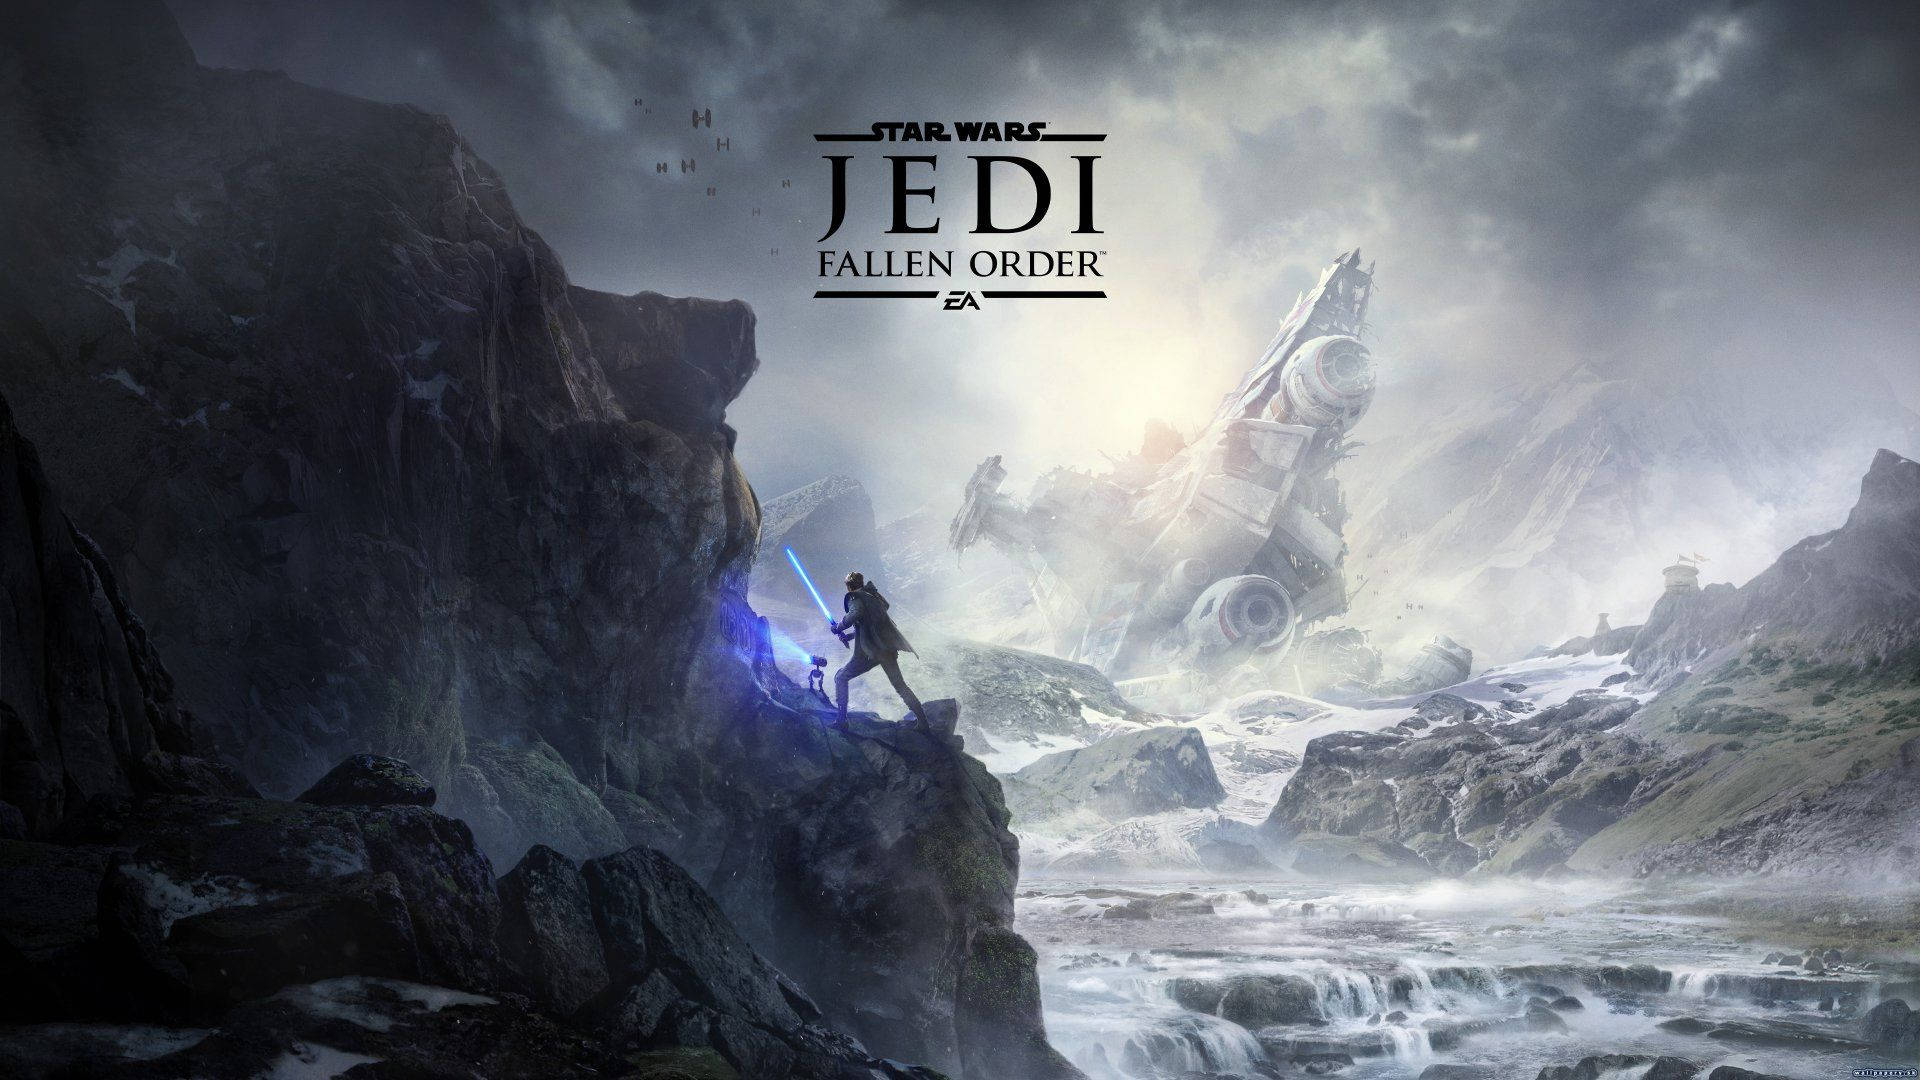 Top 999+ Star Wars Jedi Fallen Order Wallpapers Full HD, 4K✅Free to Use